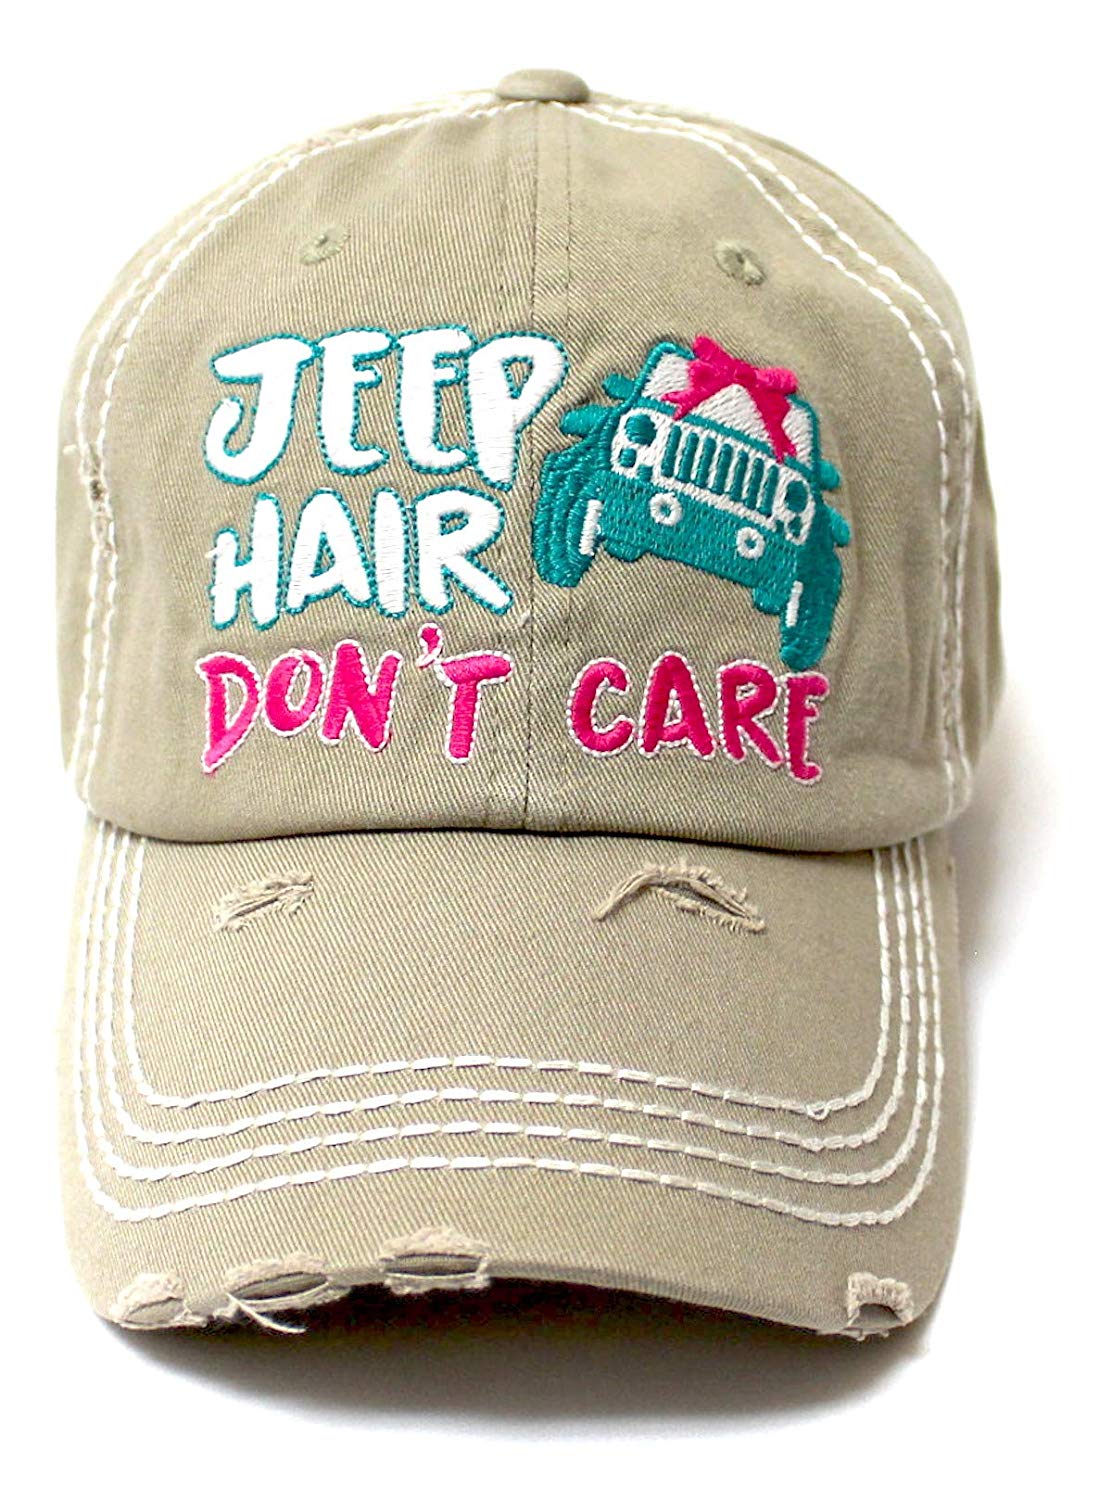 Ladies Bow-Tie Jeep Hair Don't Care Monogram Cheer Baseball Hat, Khaki - Caps 'N Vintage 